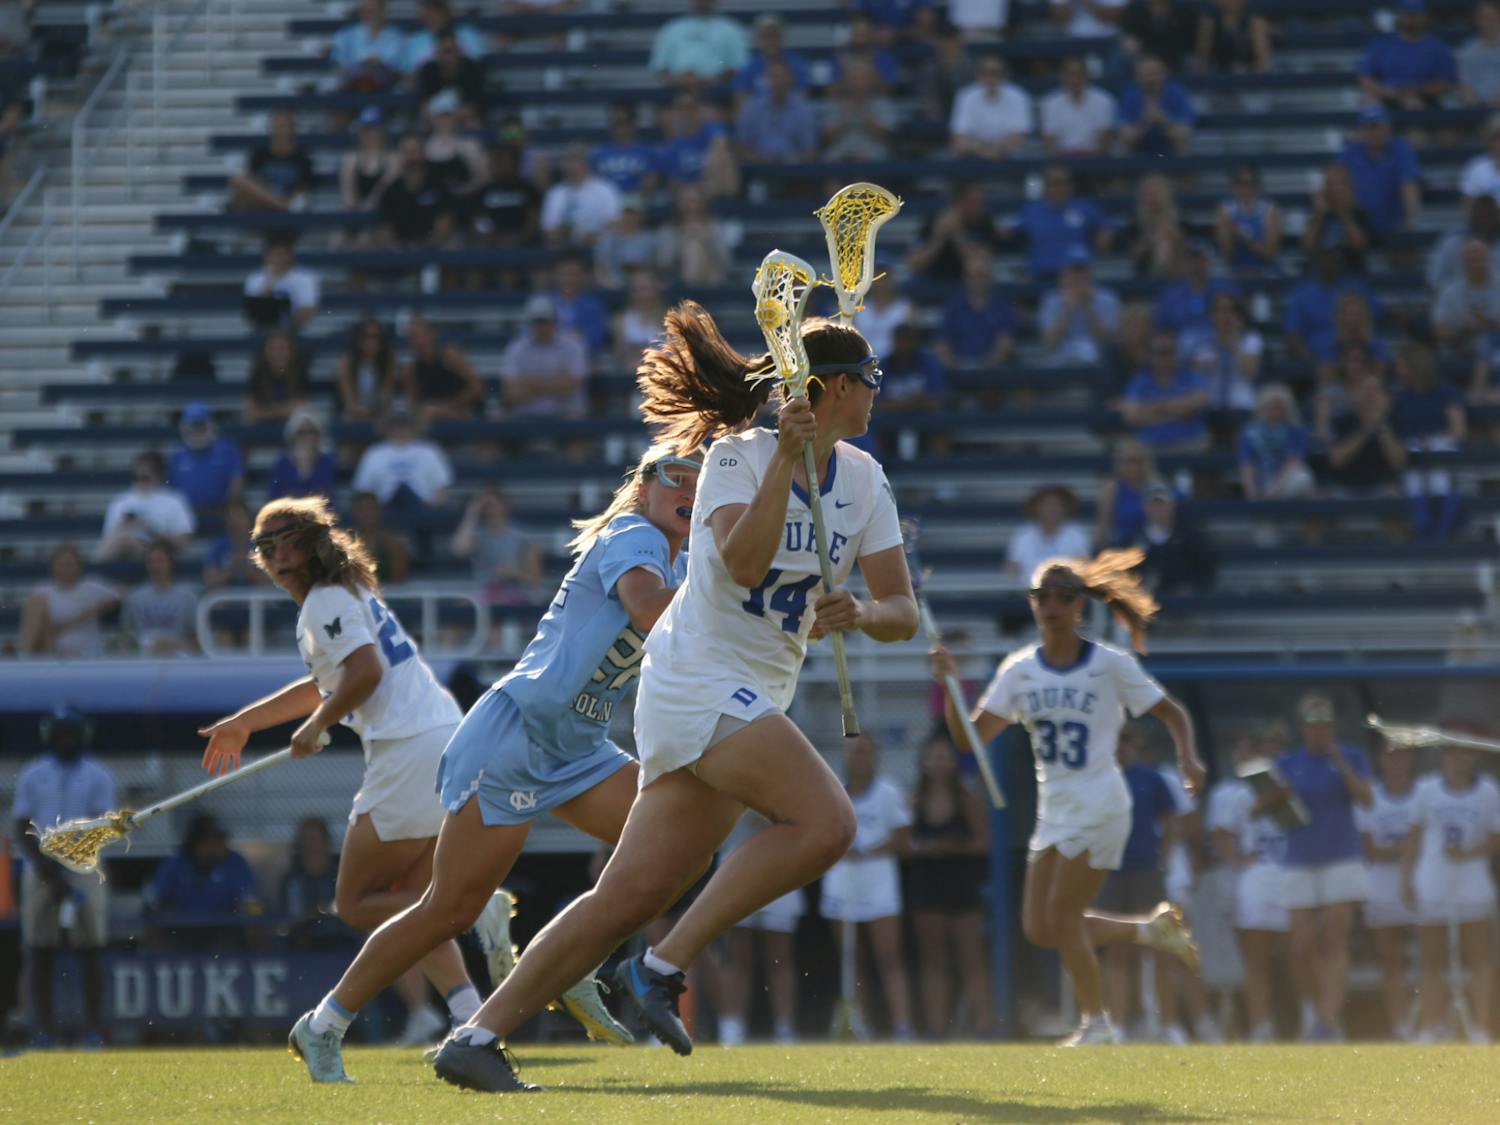 Graduate attacker Maddie Jenner cradles the ball in Duke's regular-season finale against North Carolina.